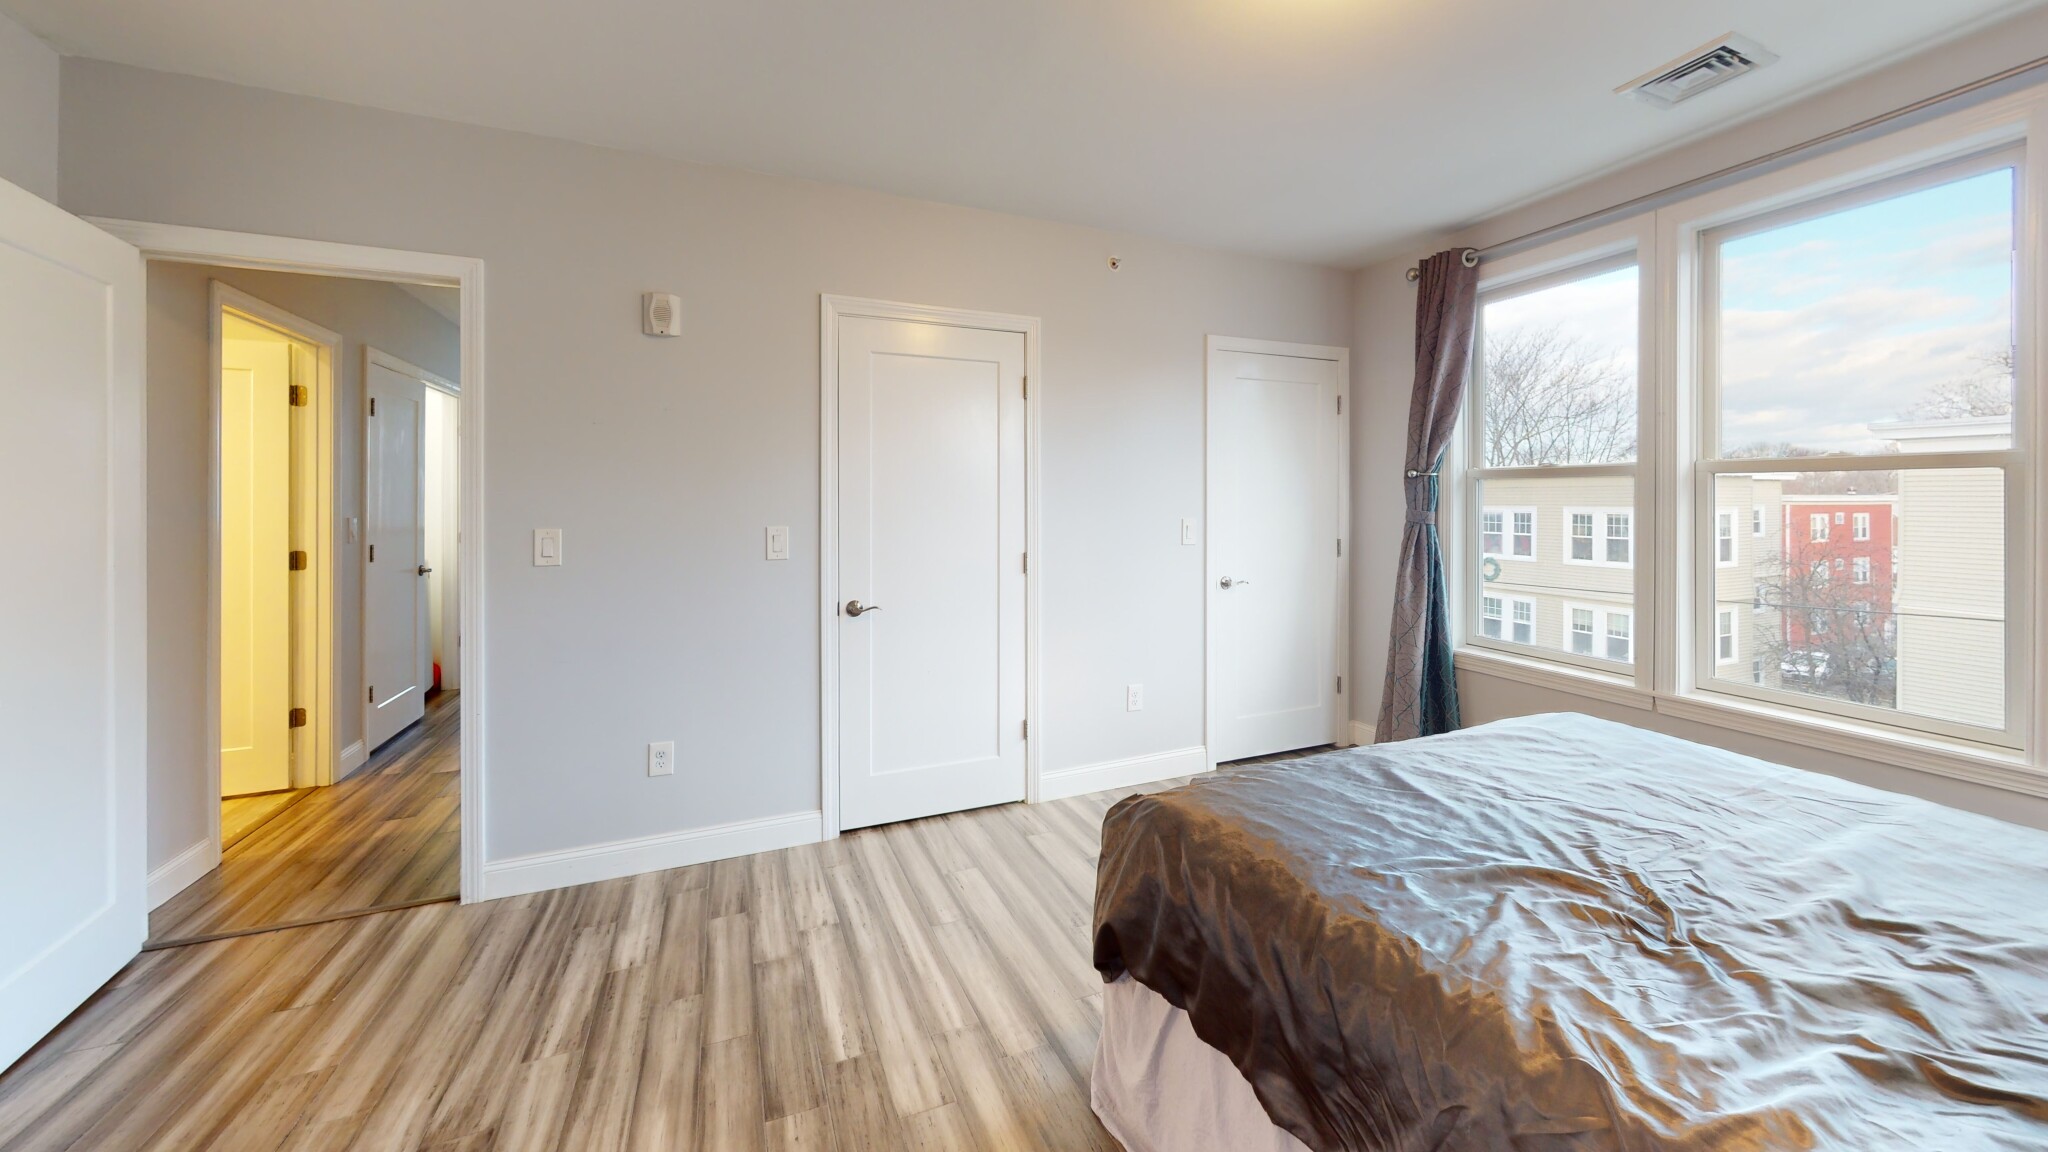 Photos of apartment on beechcroft St.,Boston MA 02135